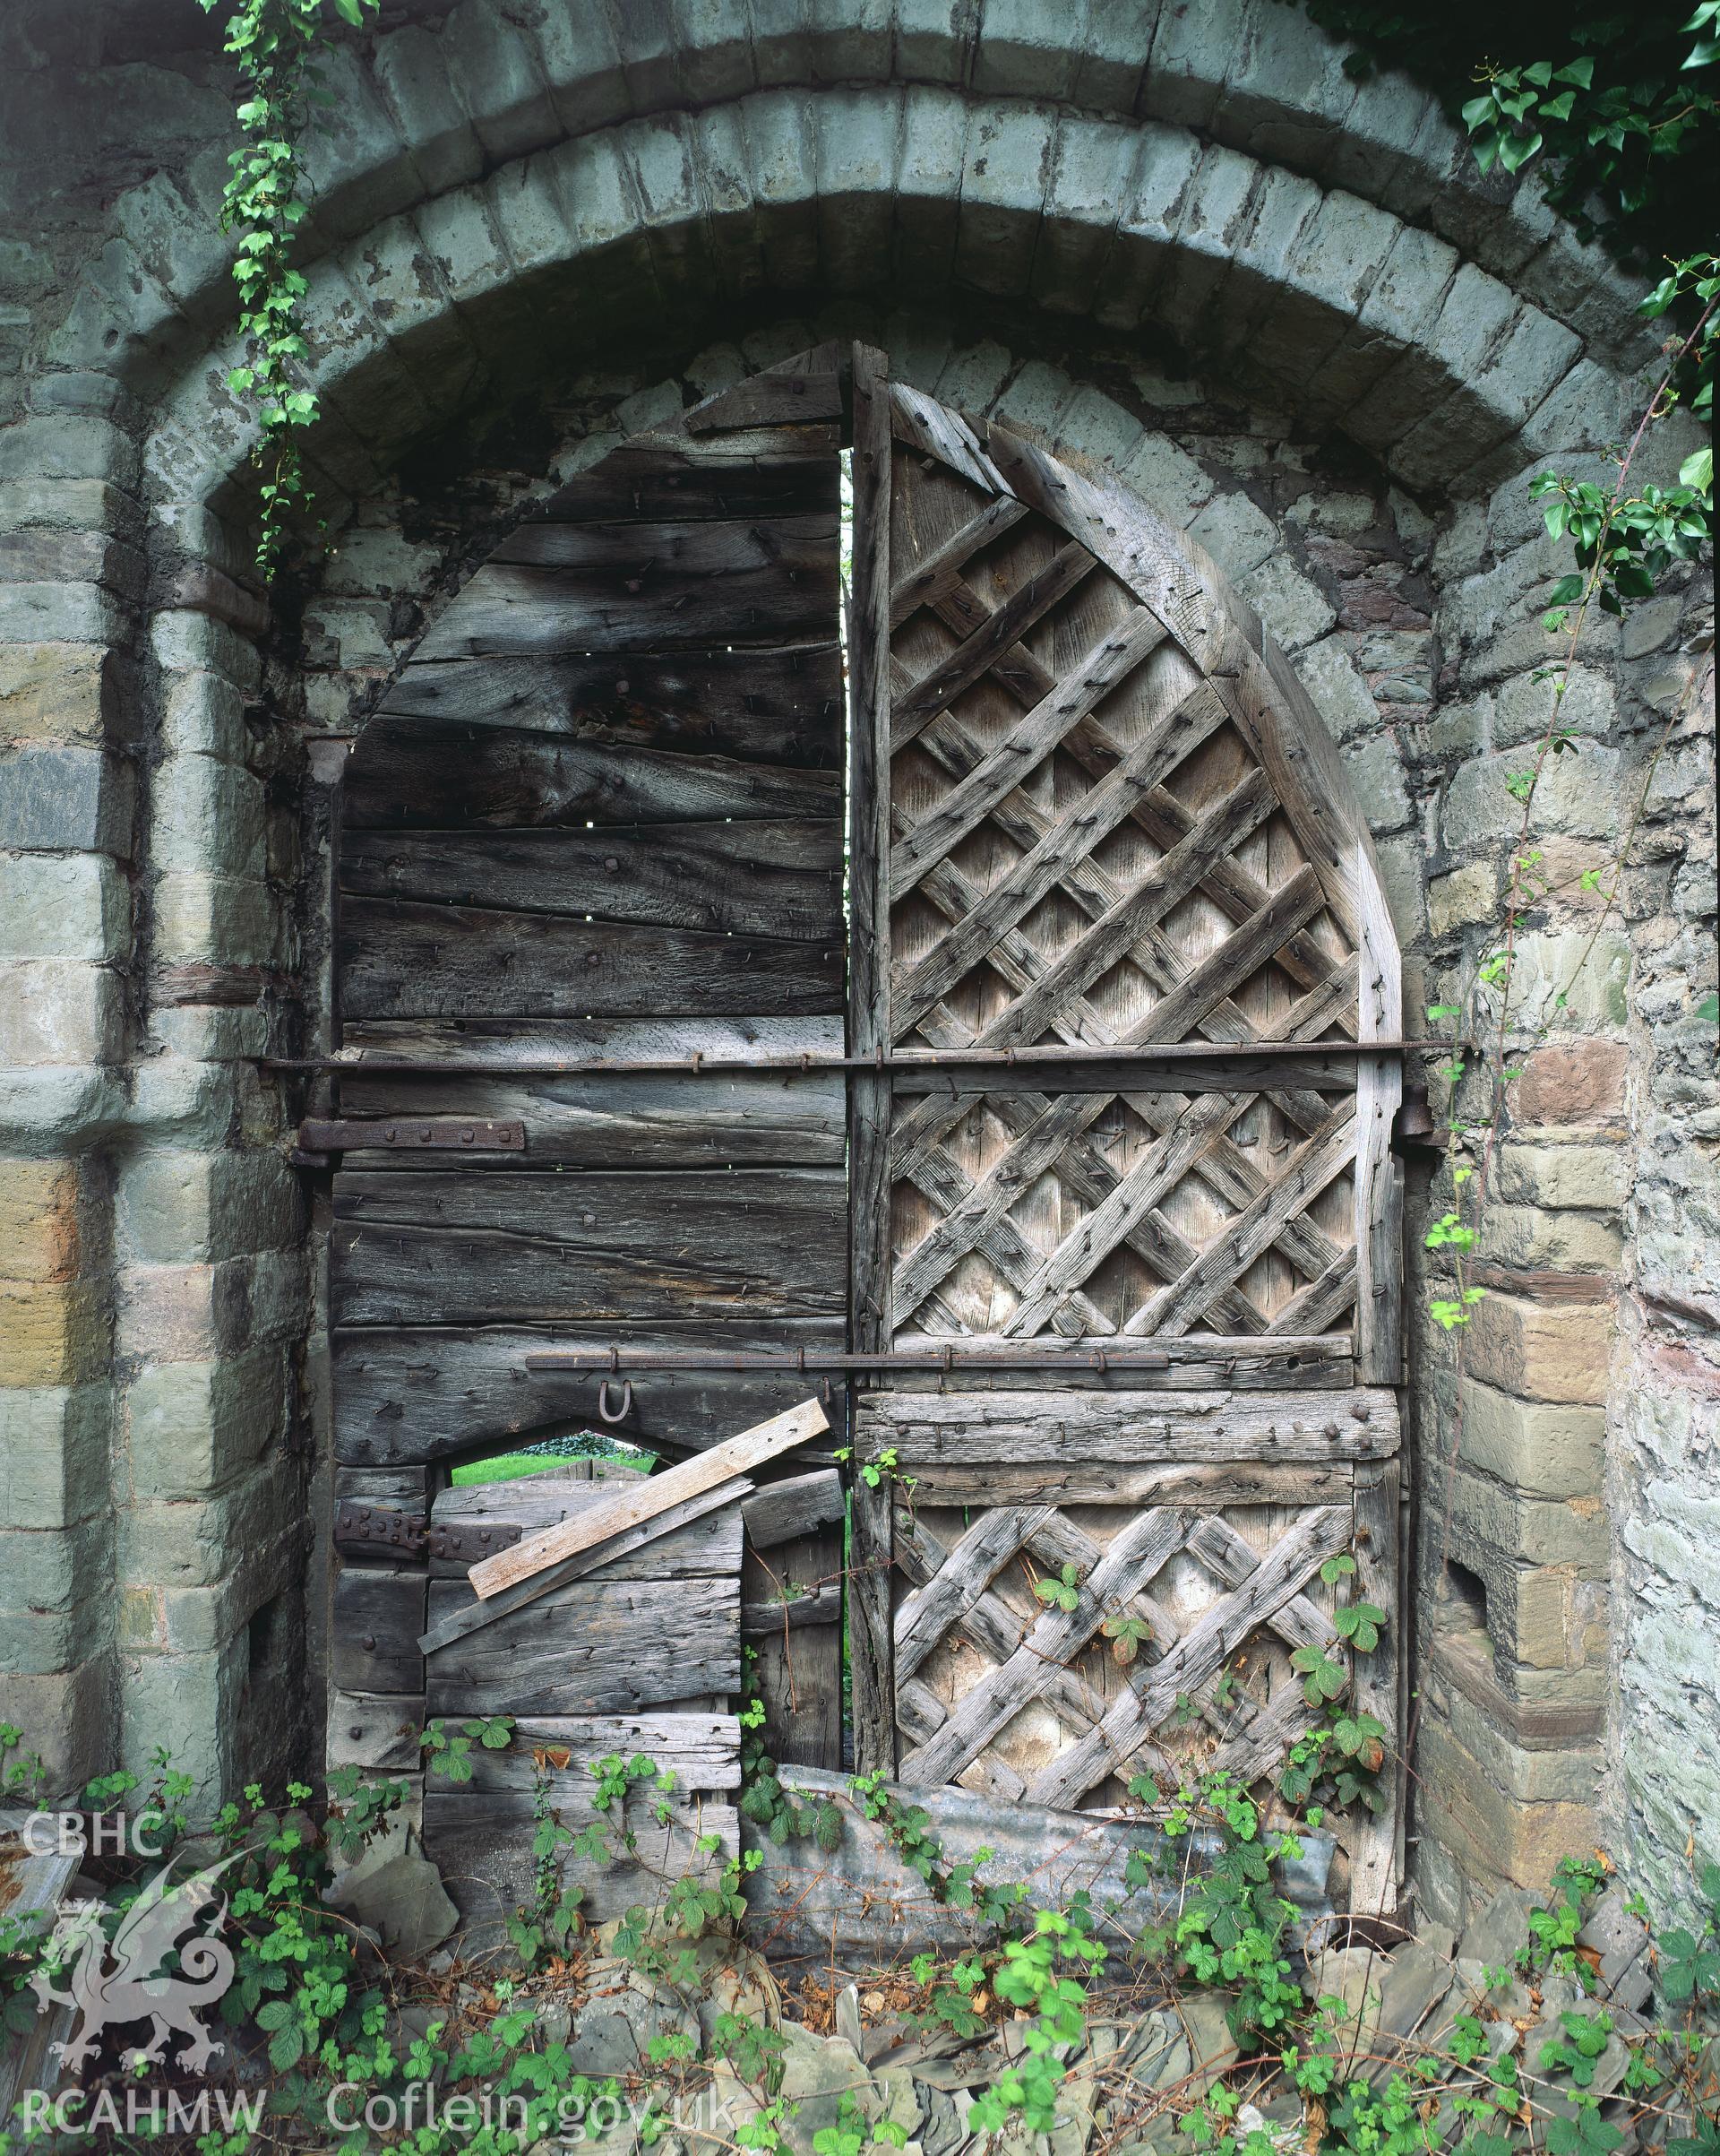 RCAHMW colour transparency showing Hay Castle gateway